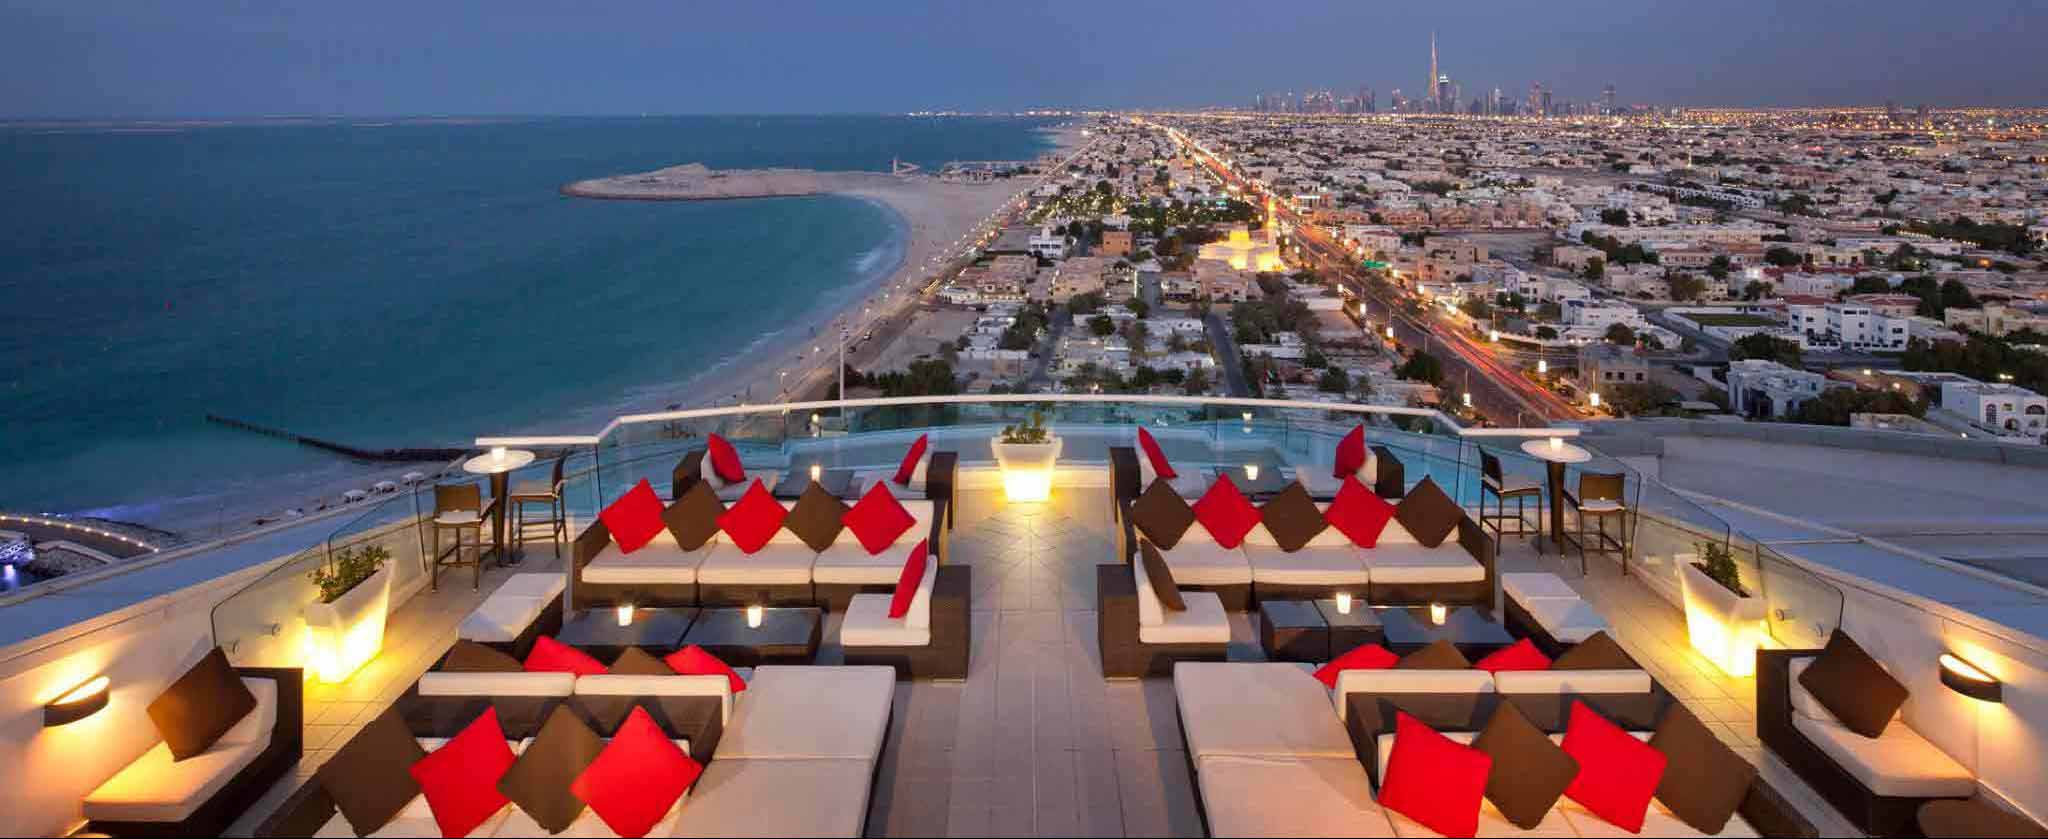 Top 10 Rooftop Bars in Dubai